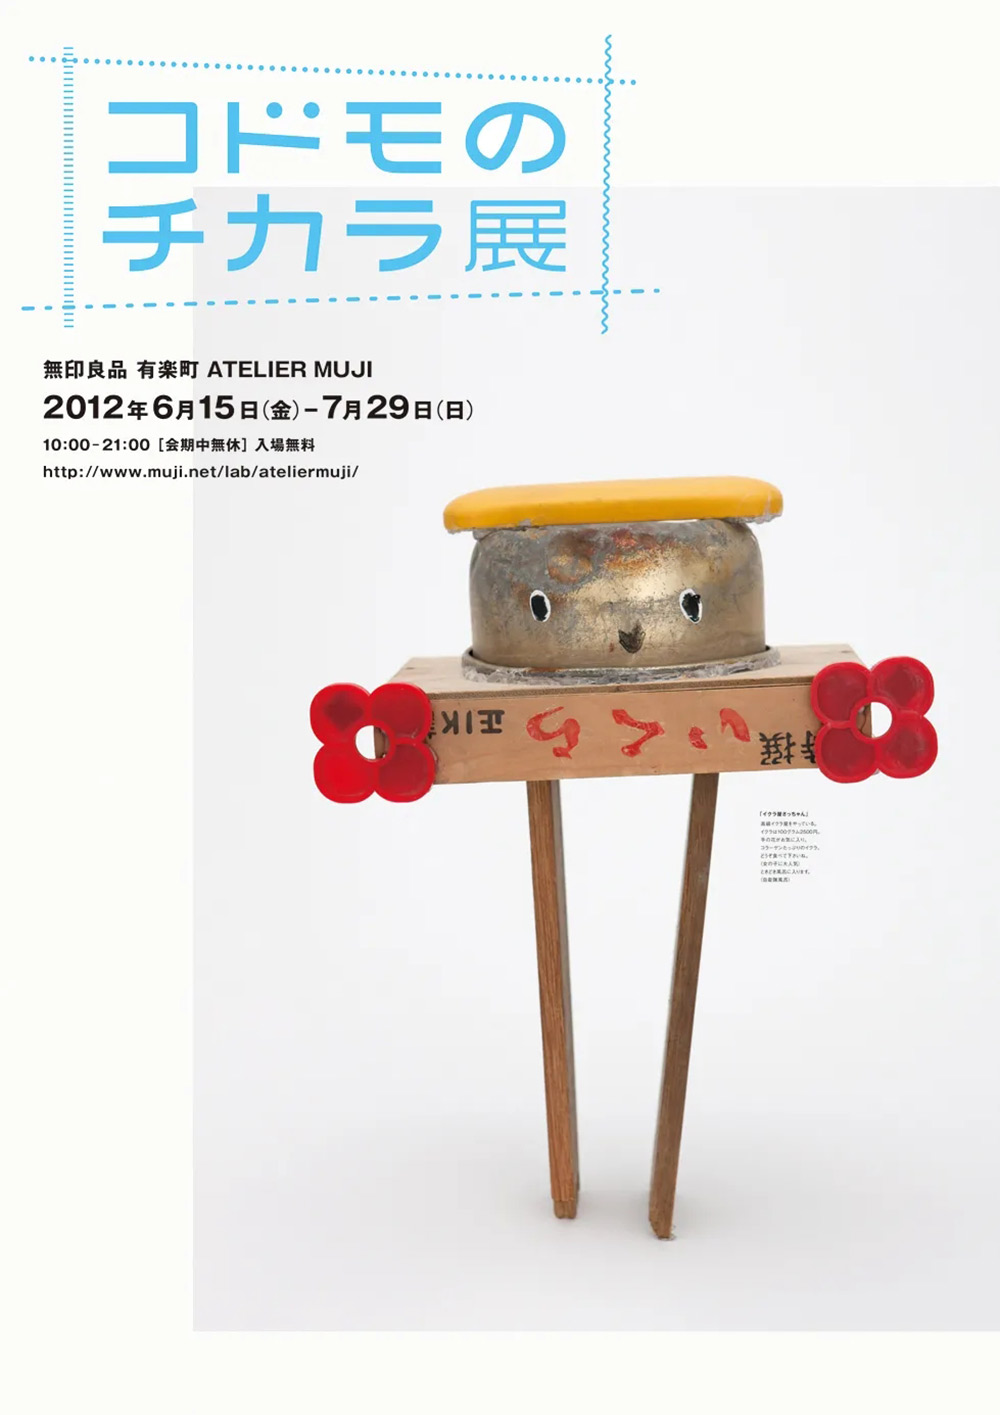 12张Norito Shinmura创意海报设计